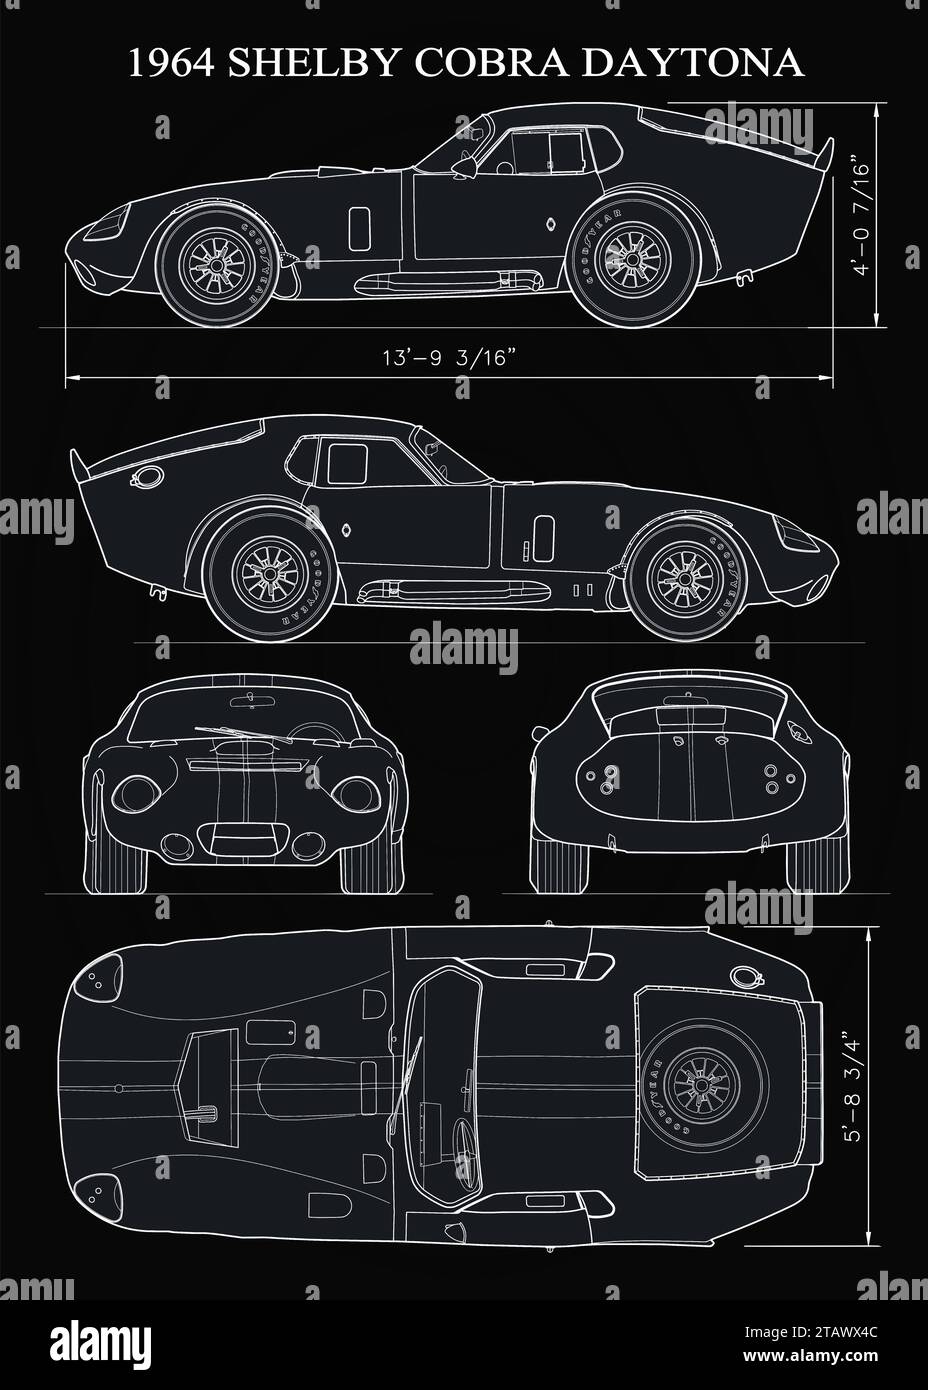 1964 Shelby Cobra Daytona Coupé prototipo Car Blueprint Illustrazione Vettoriale